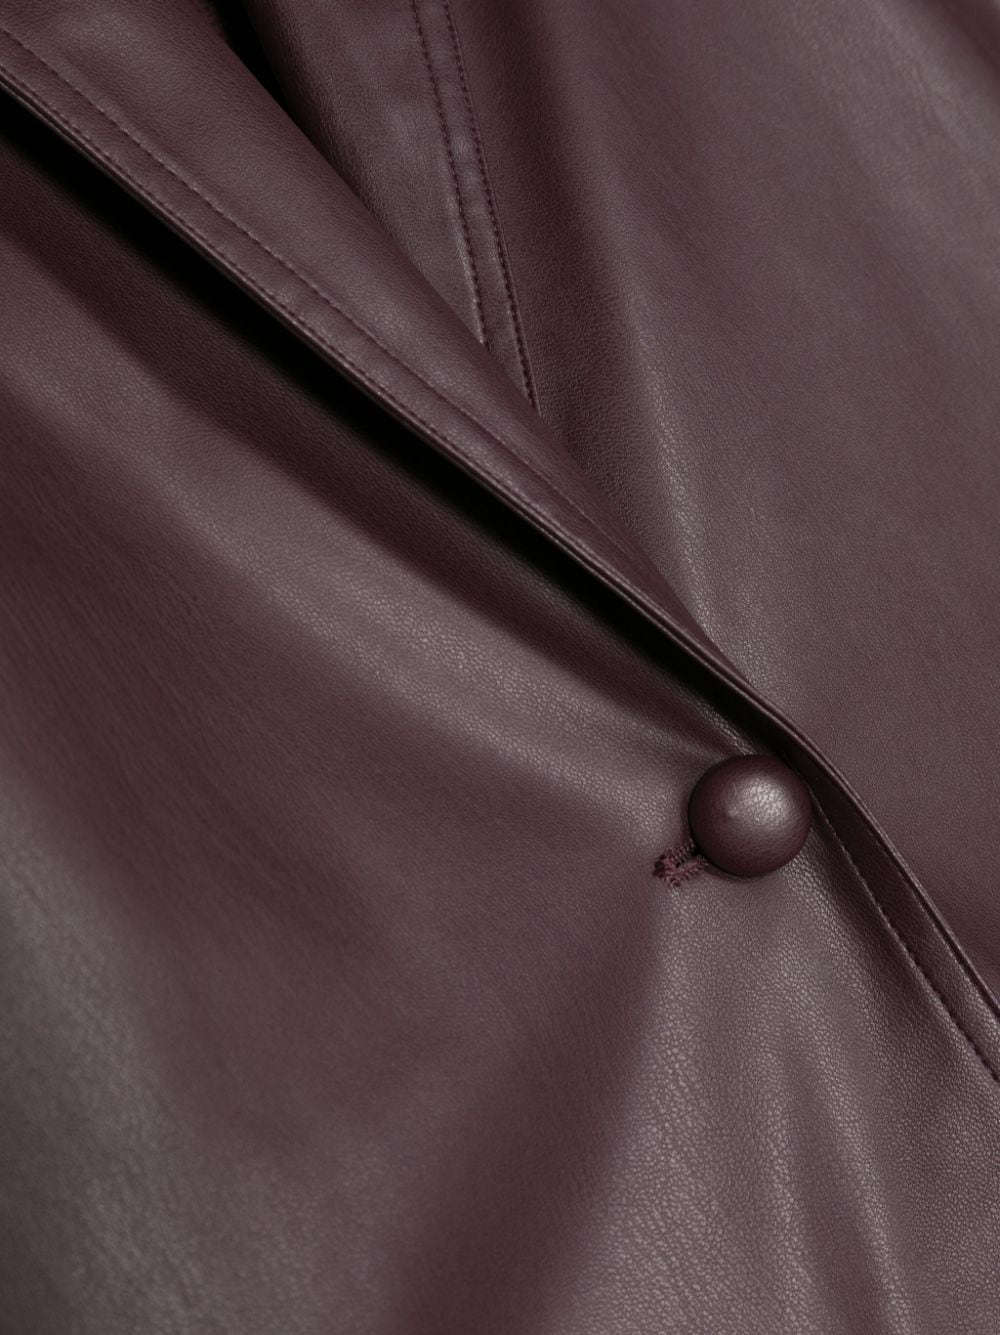 Purple faux leather blazer for girls